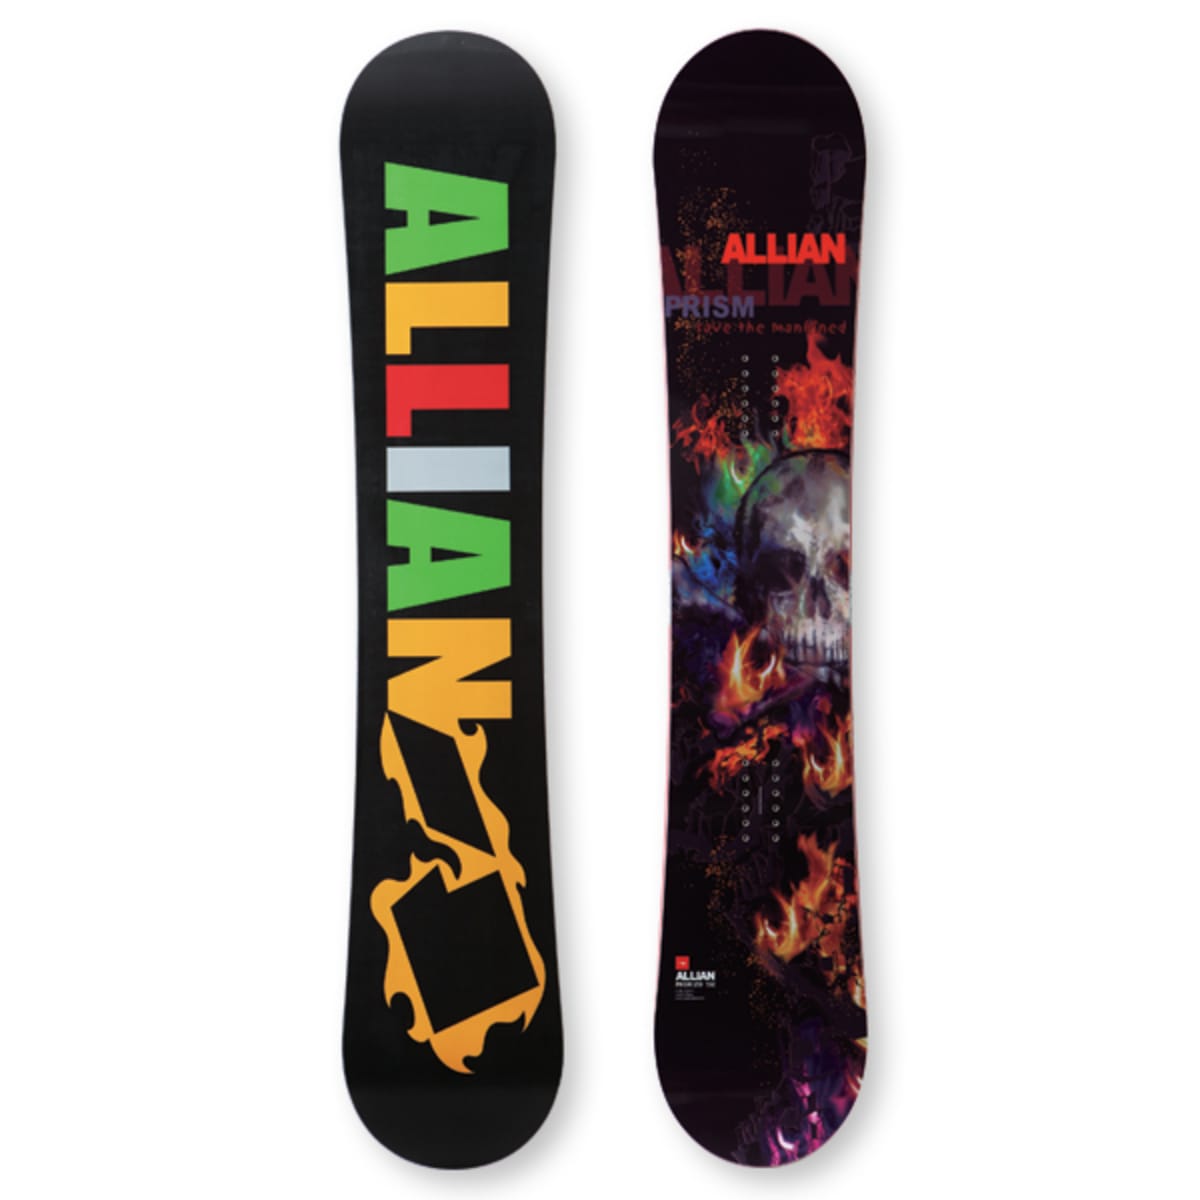 Allian Prism LTD Snowboard - Snowboarder